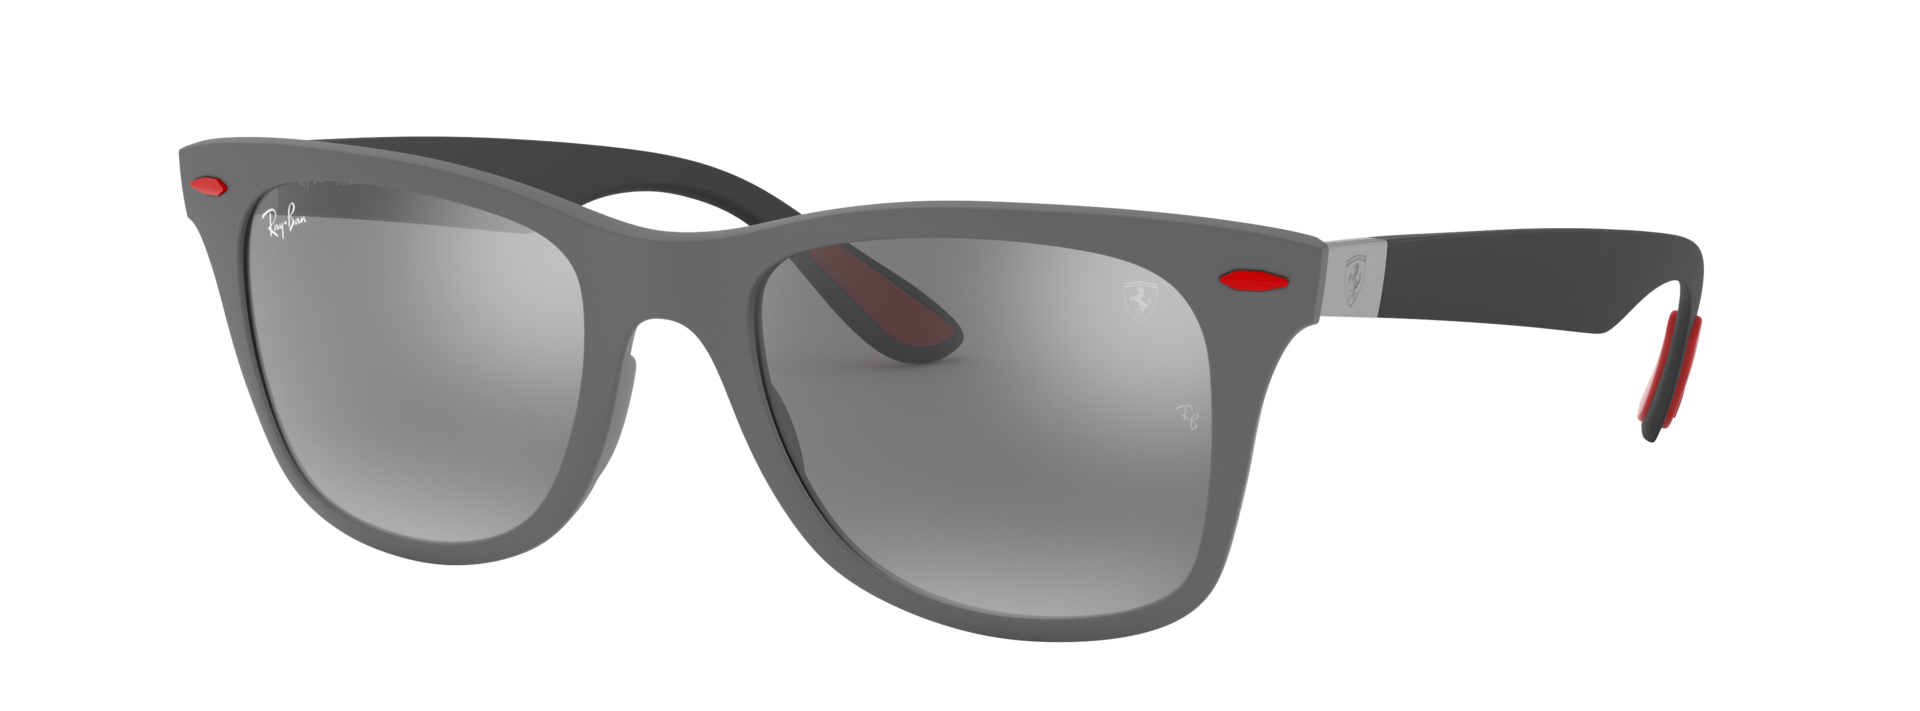 ray ban ferrari wayfarer liteforce sunglasses in matte grey with silver mirror lenses